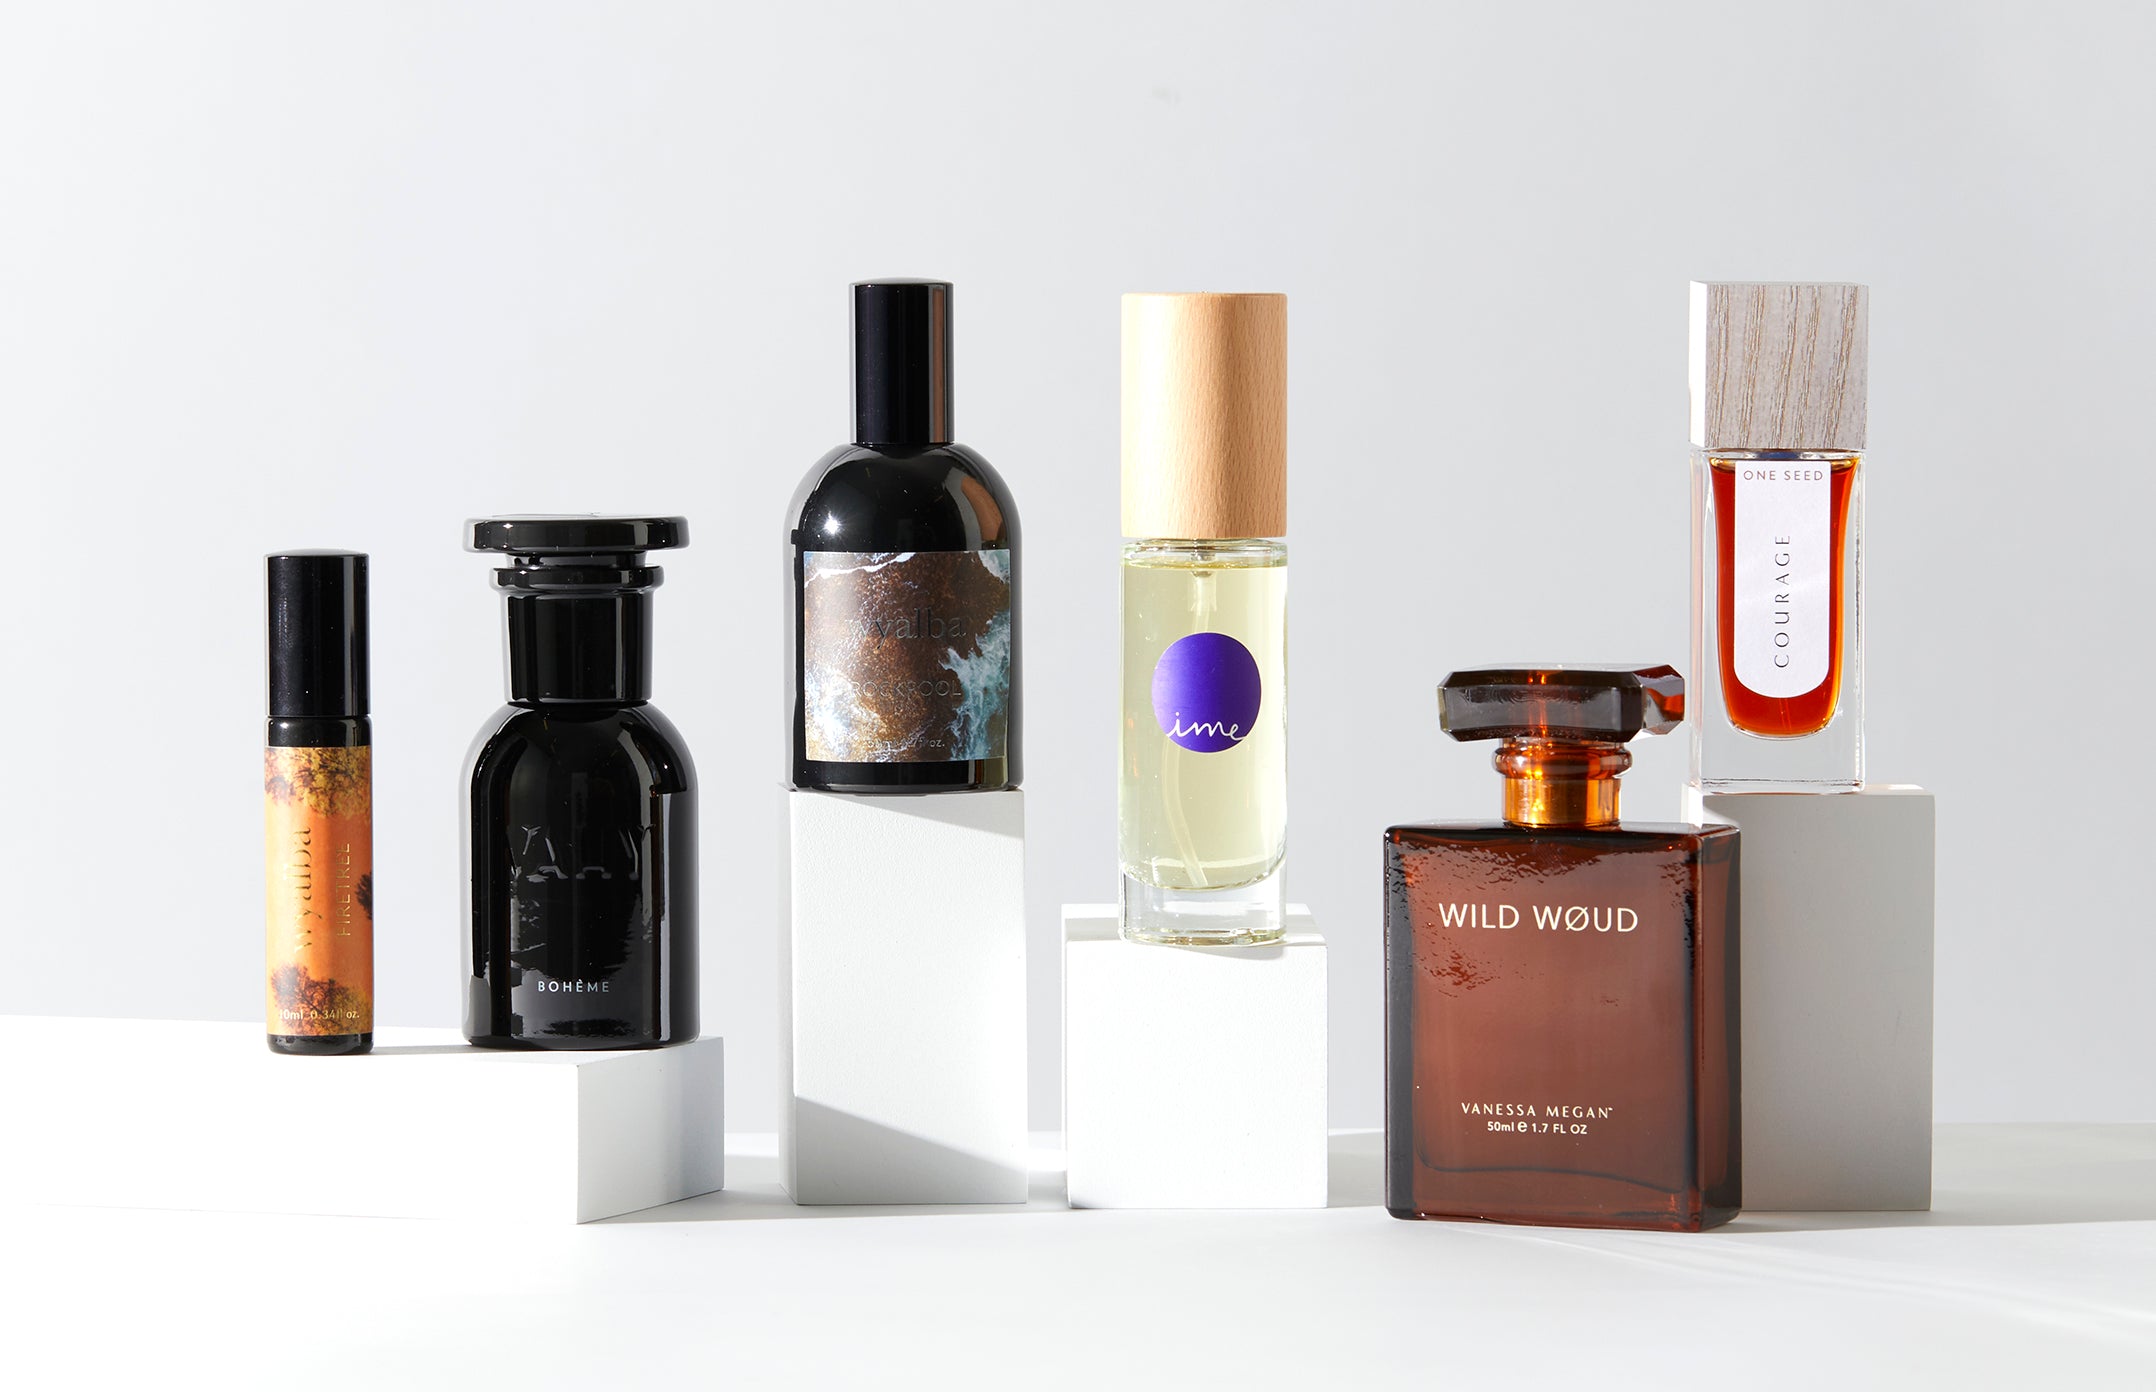 Sensoriam natural perfumes